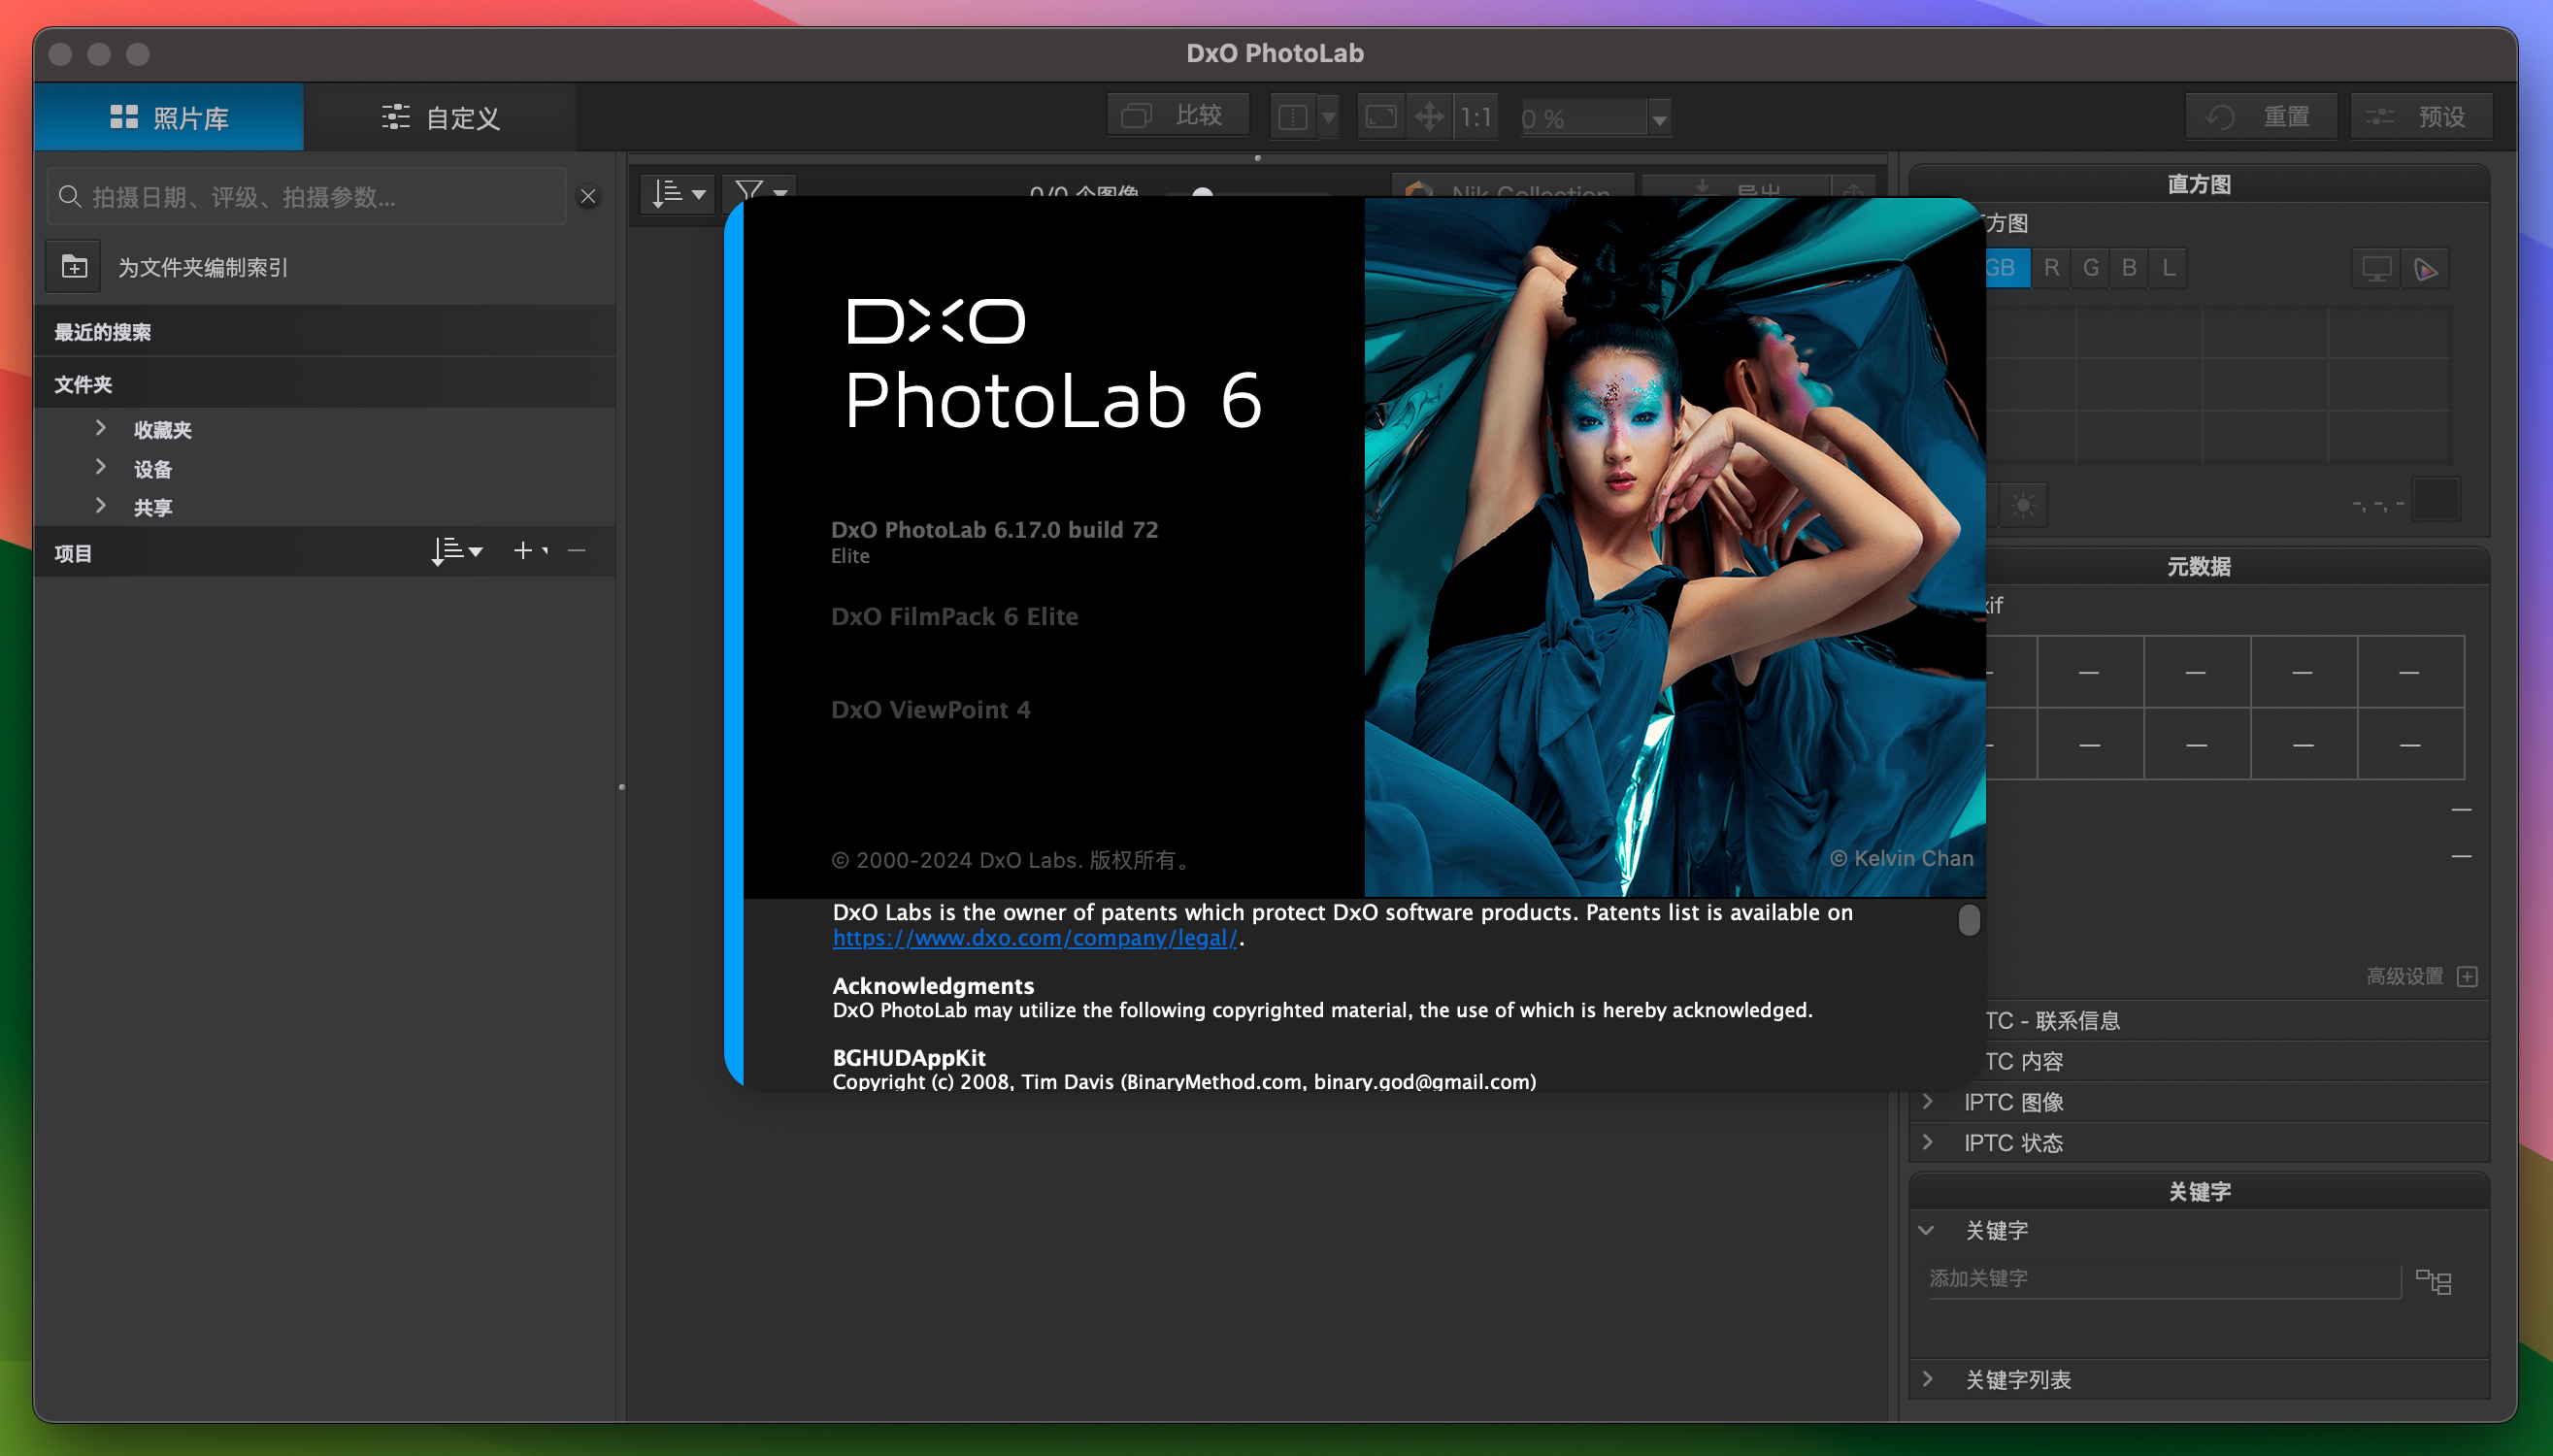 DxO PhotoLab 6 for Mac v6.17.0.72 专业照片编辑软件 免激活下载-1